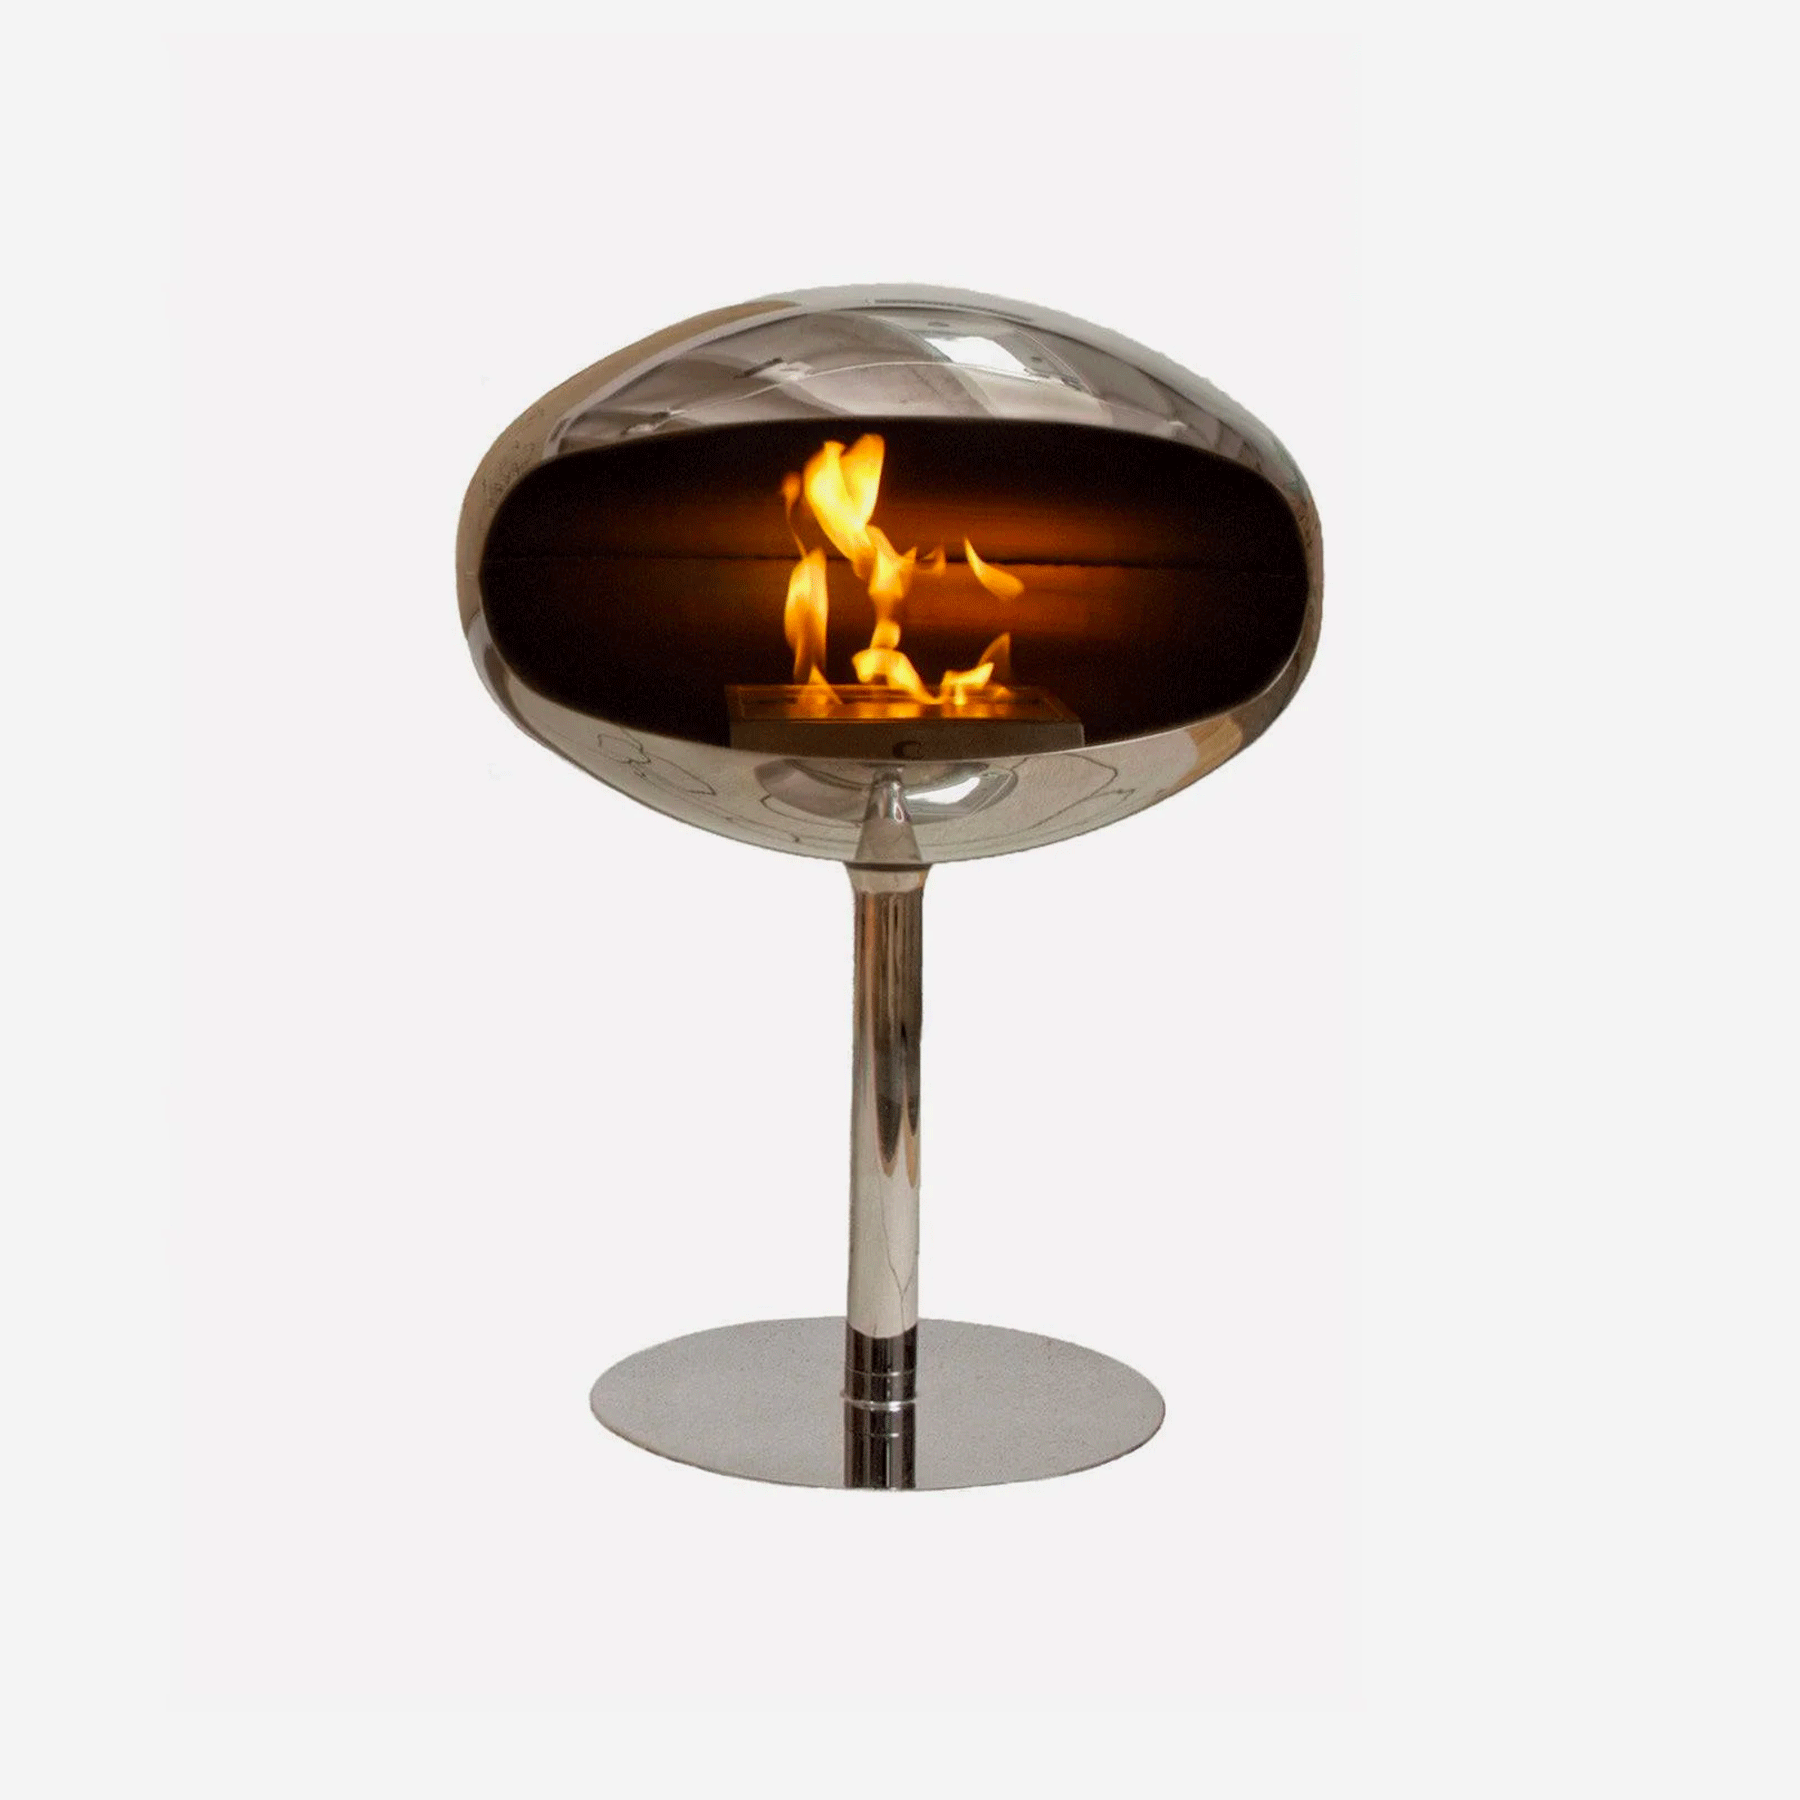 Ex.Display Aeries Fireplace, Pedestal